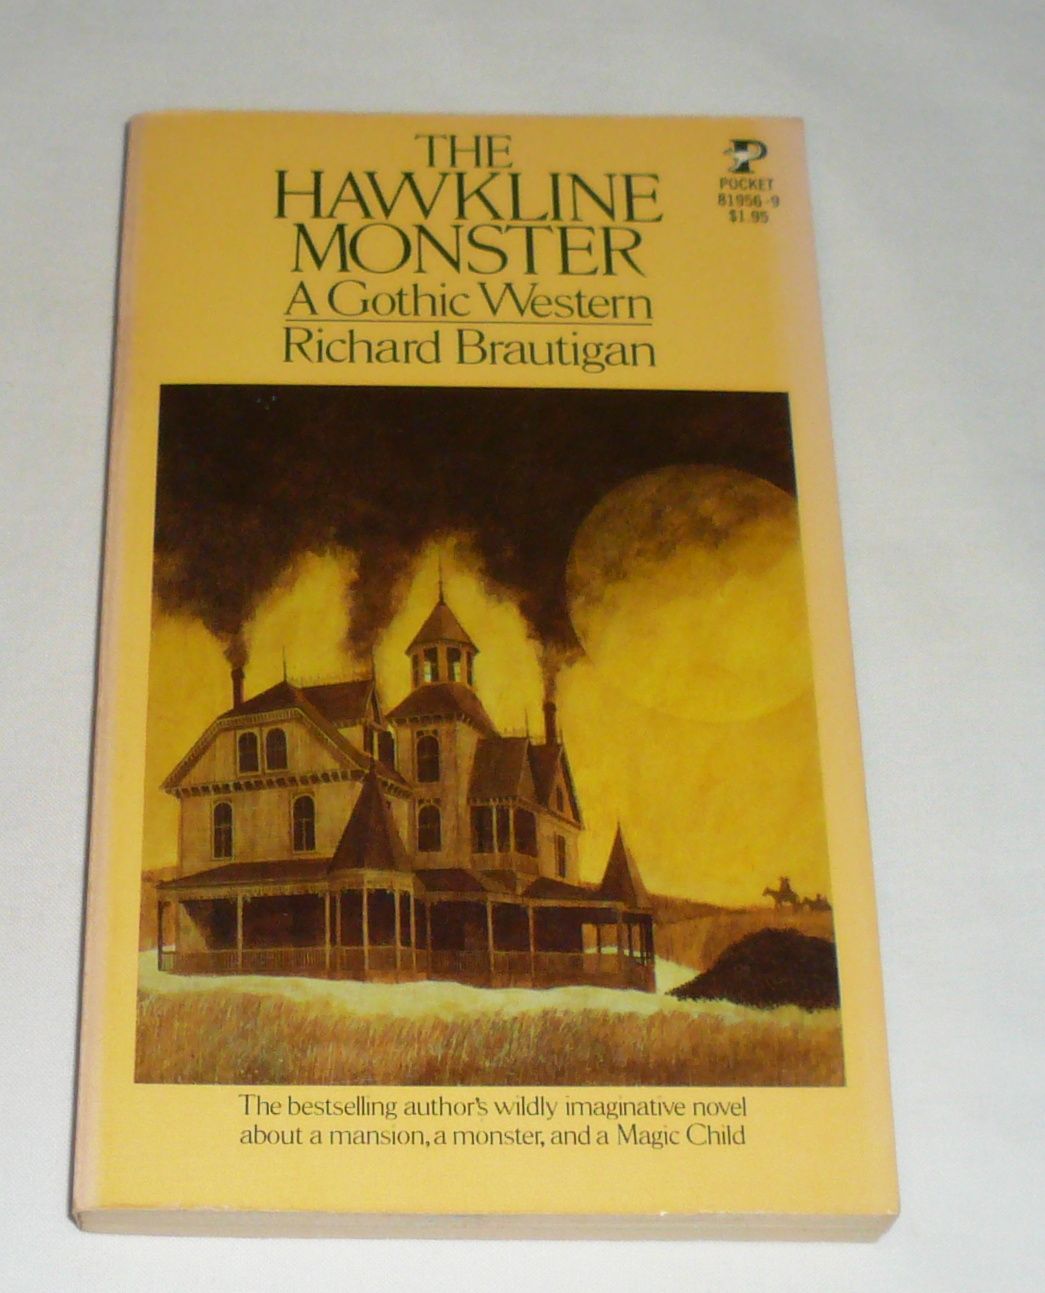 1976 Richard Brautigan THE HAWKLINE MONSTER ~ Pocket Books 81956 9